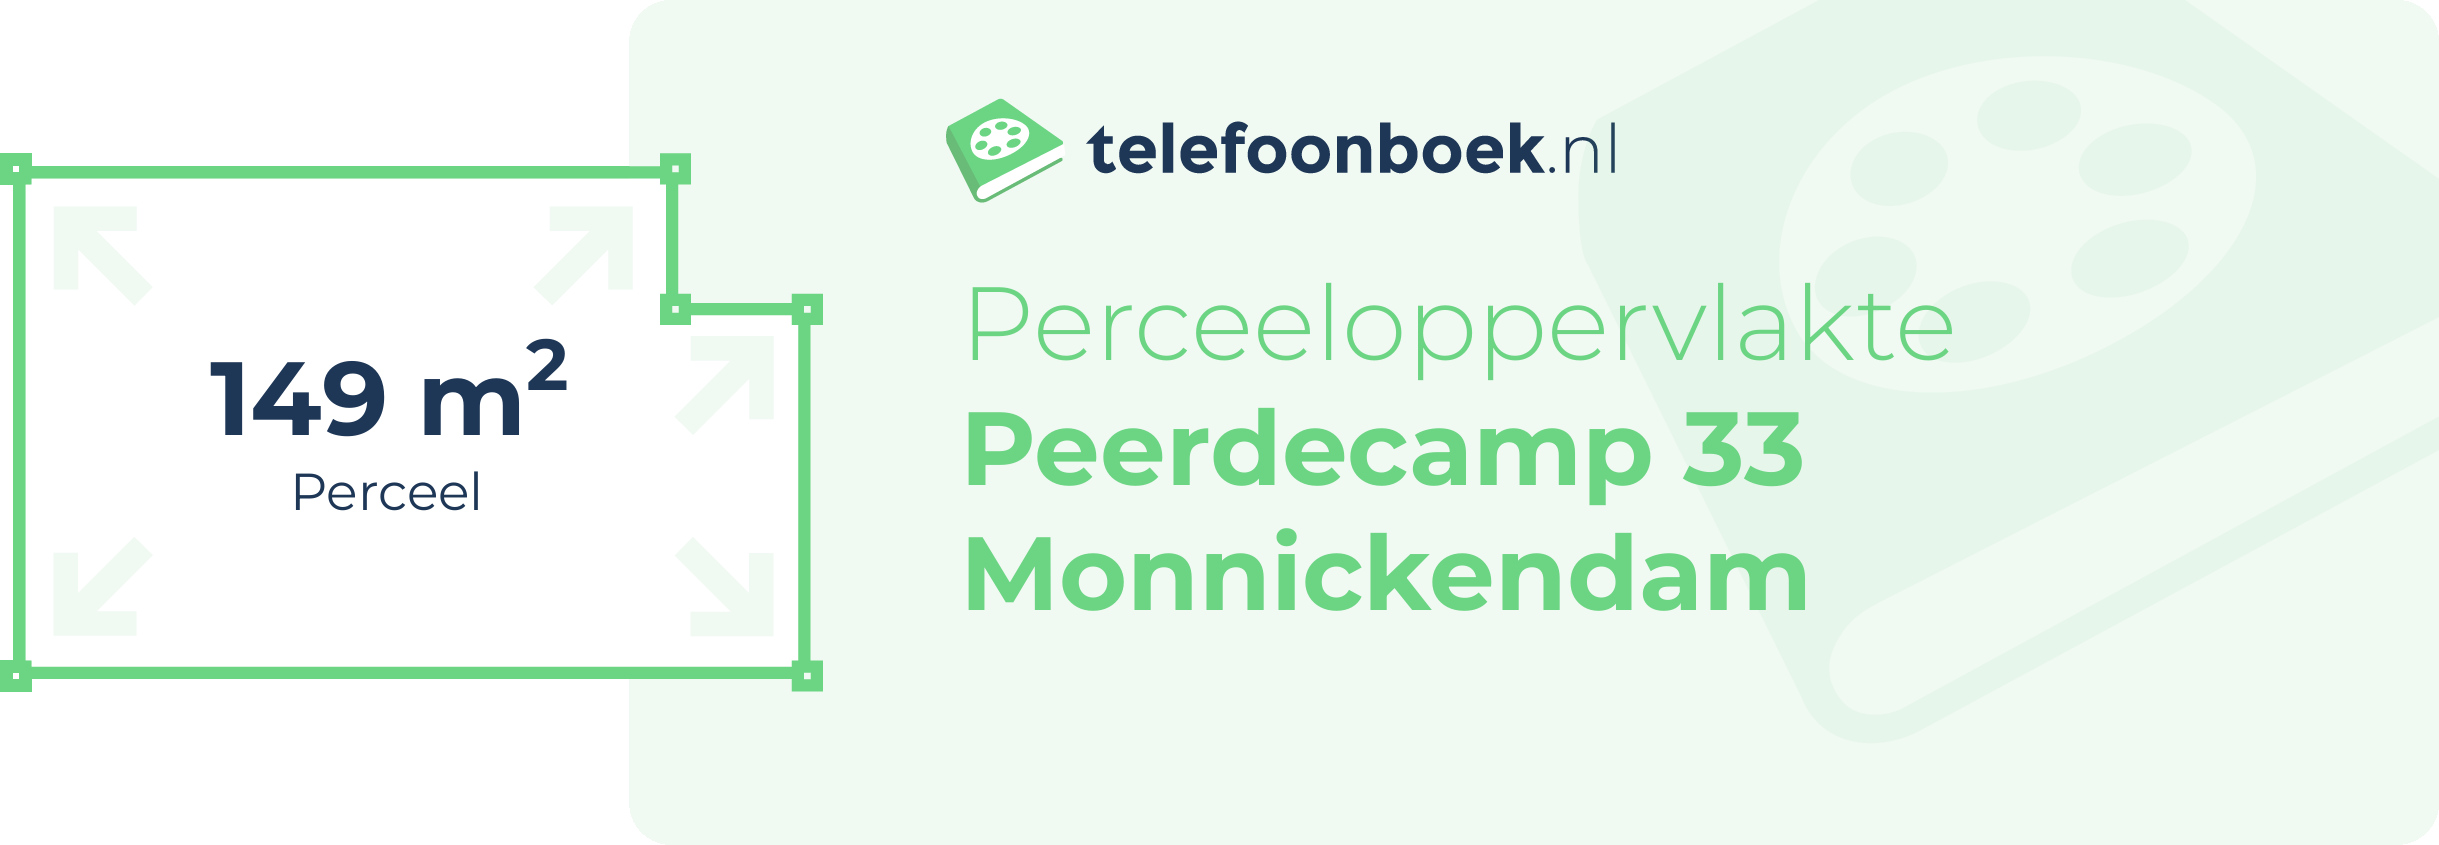 Perceeloppervlakte Peerdecamp 33 Monnickendam